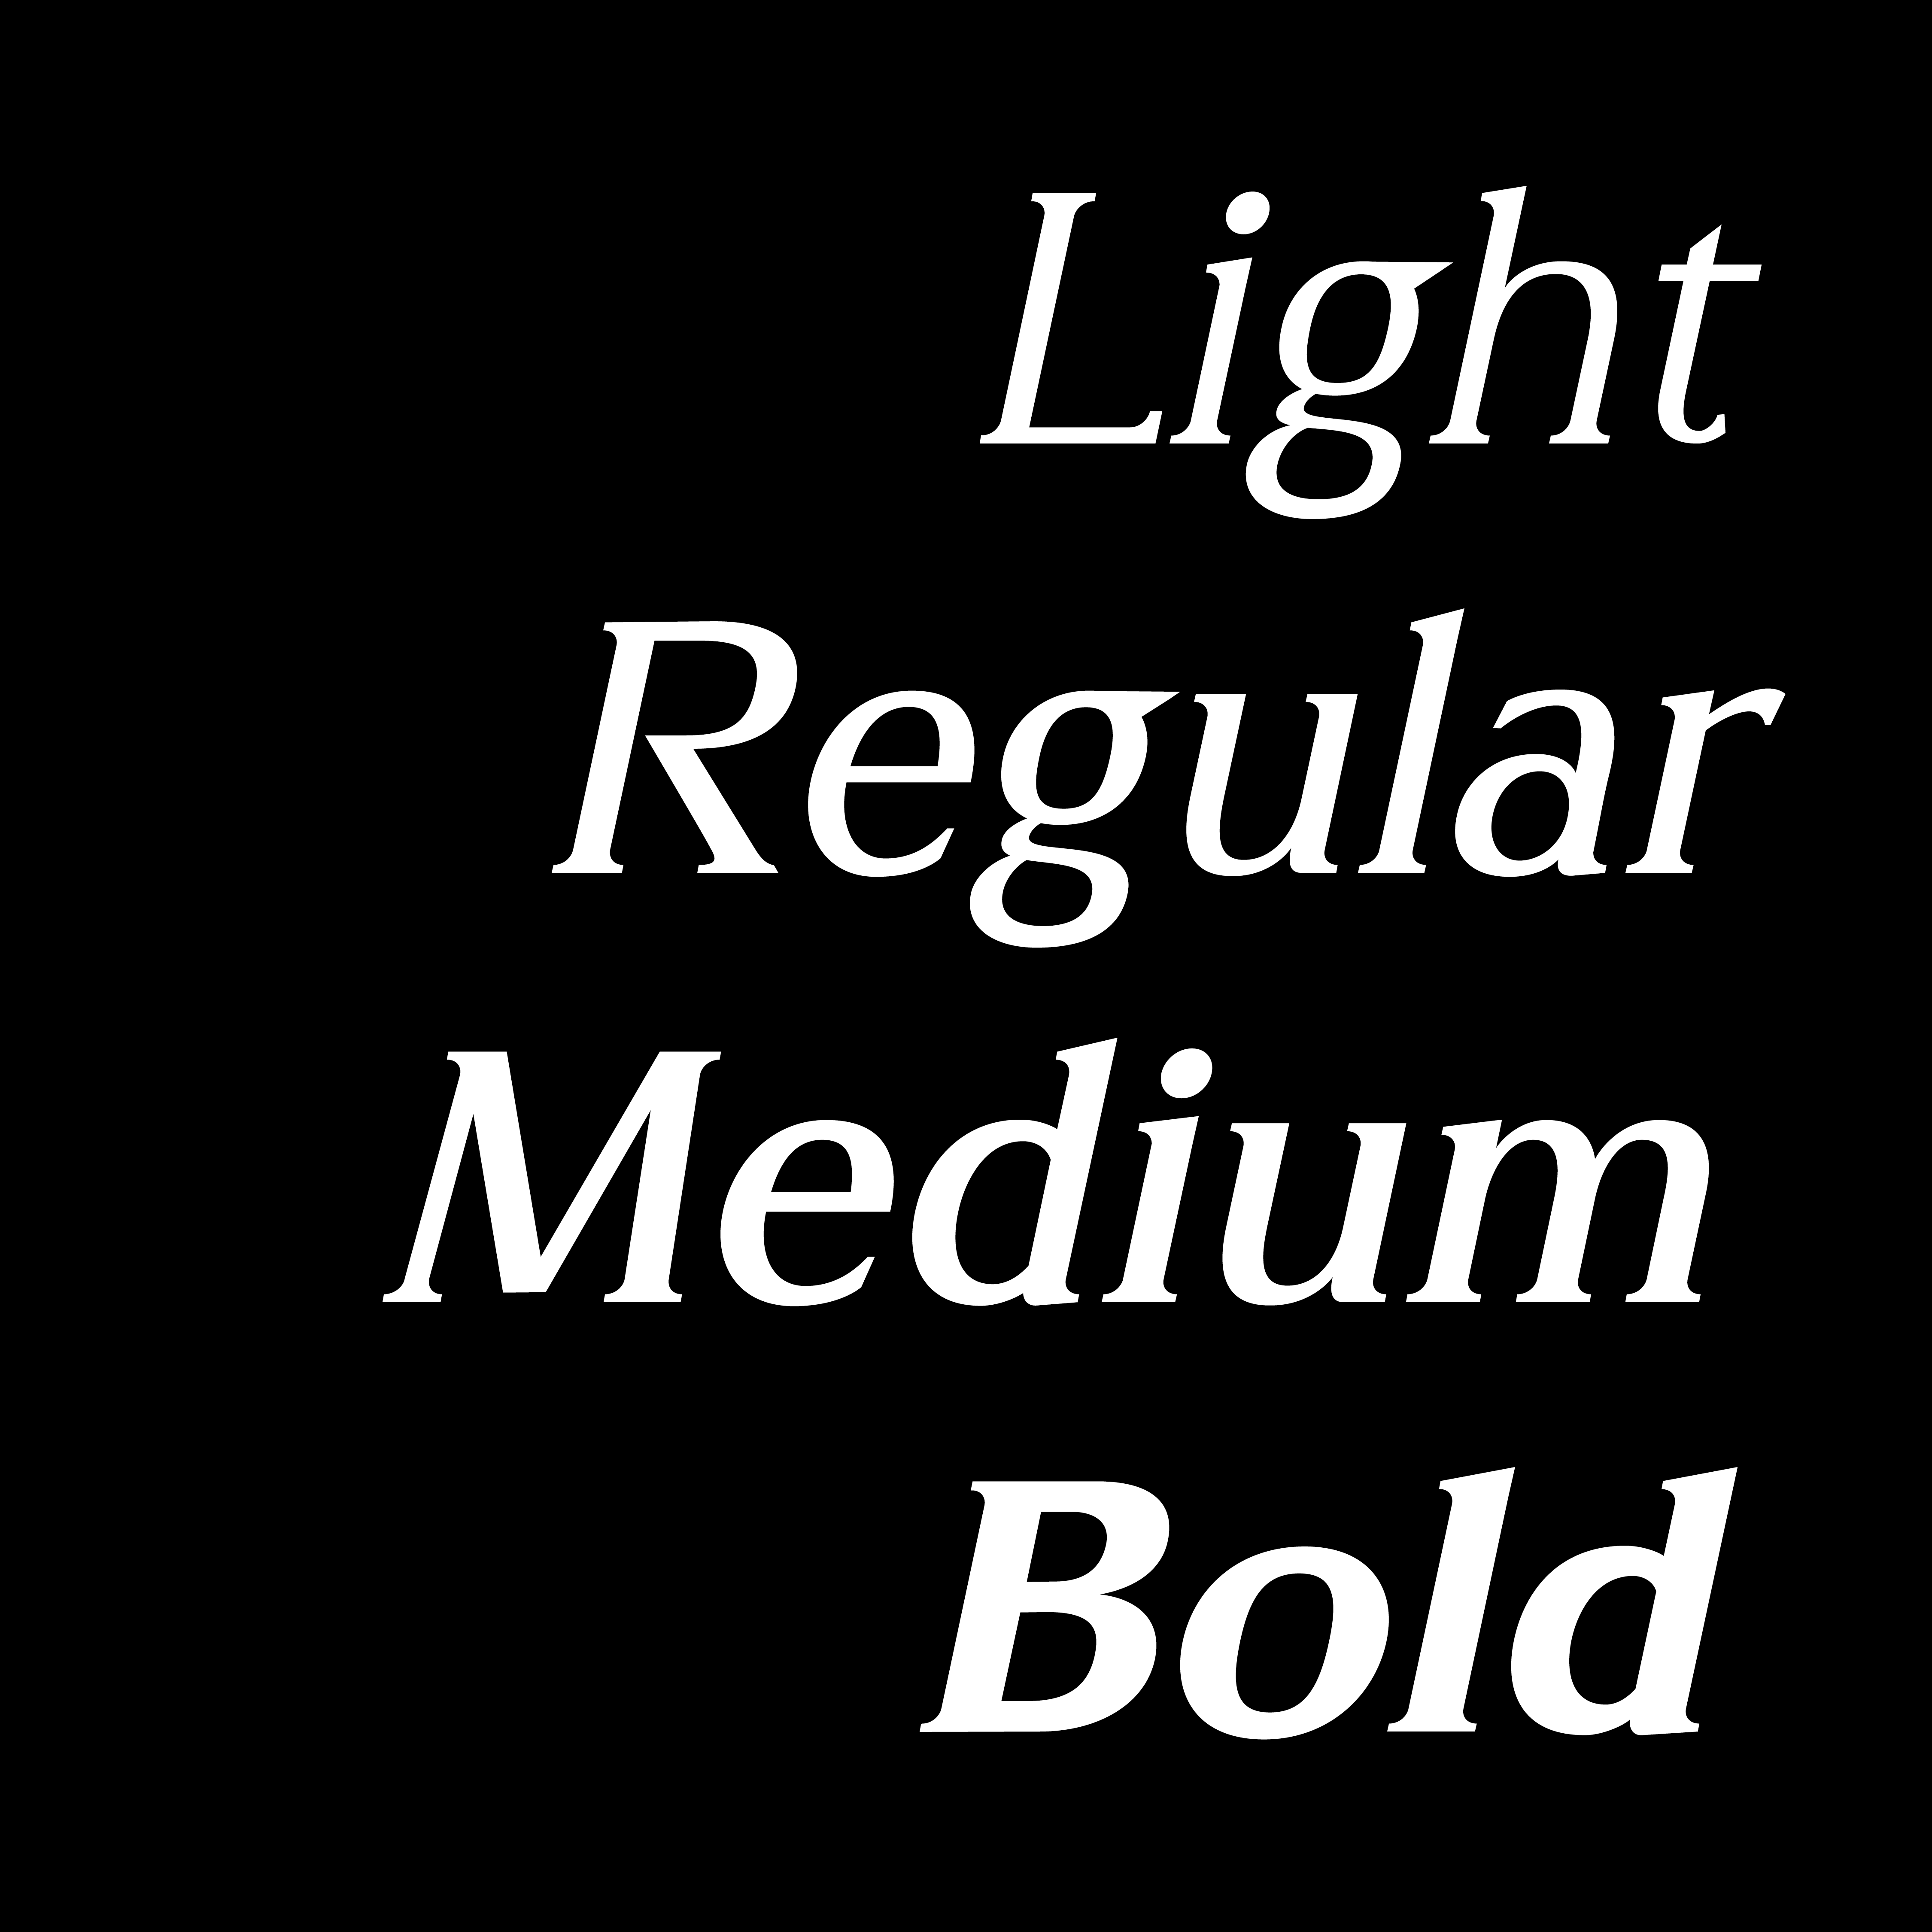 Italic: Light, Regular, Medium, Bold